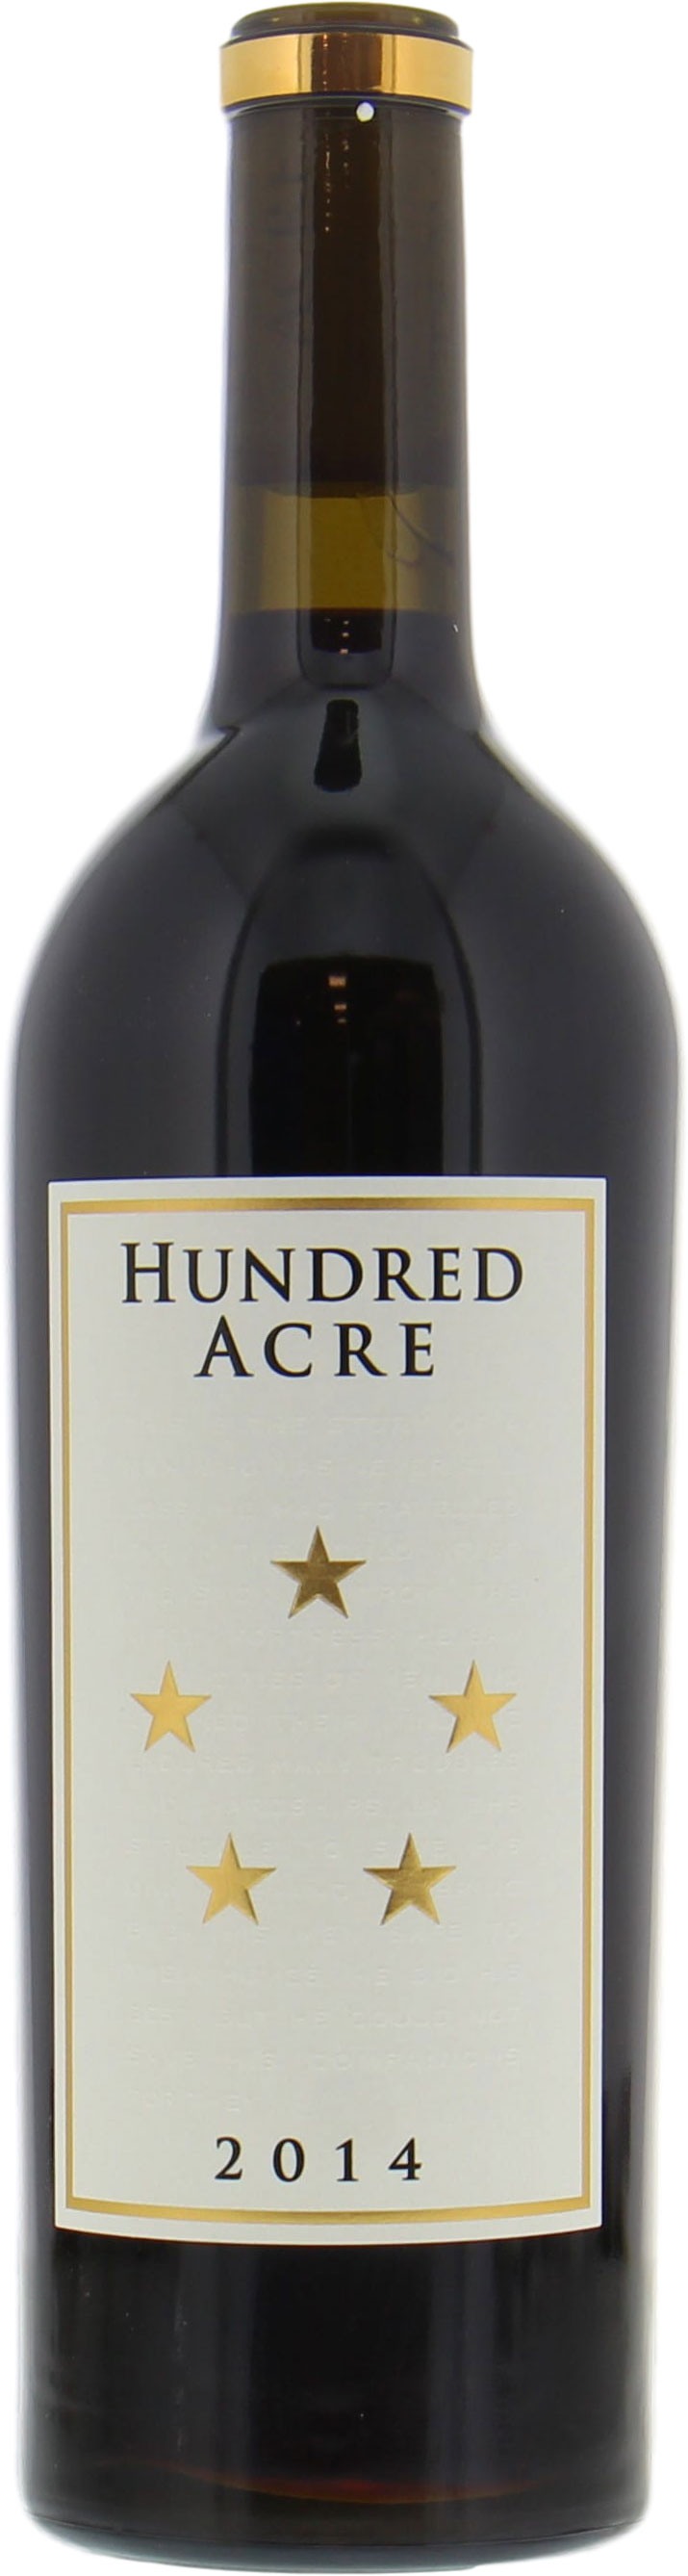 Hundred Acre Vineyard - Cabernet Sauvignon Kayli Morgan Vineyard 2014 Perfect